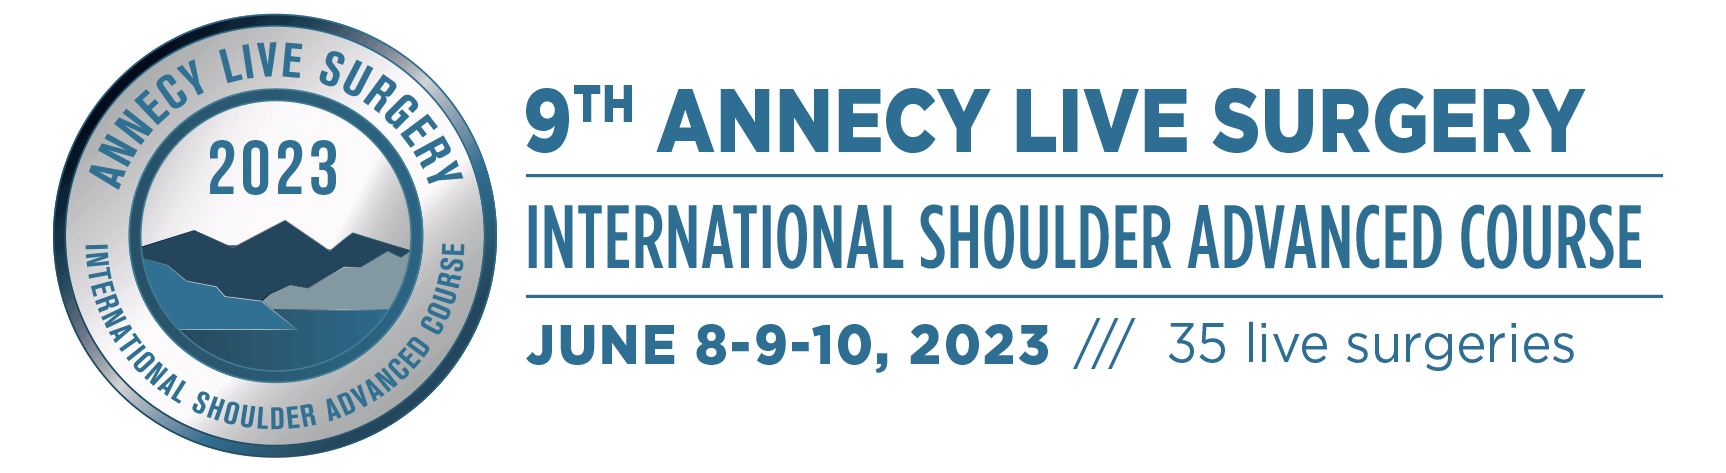 Annecy Live Surgery / June 8-9-10, 2023: International Shoulder Advanced Course